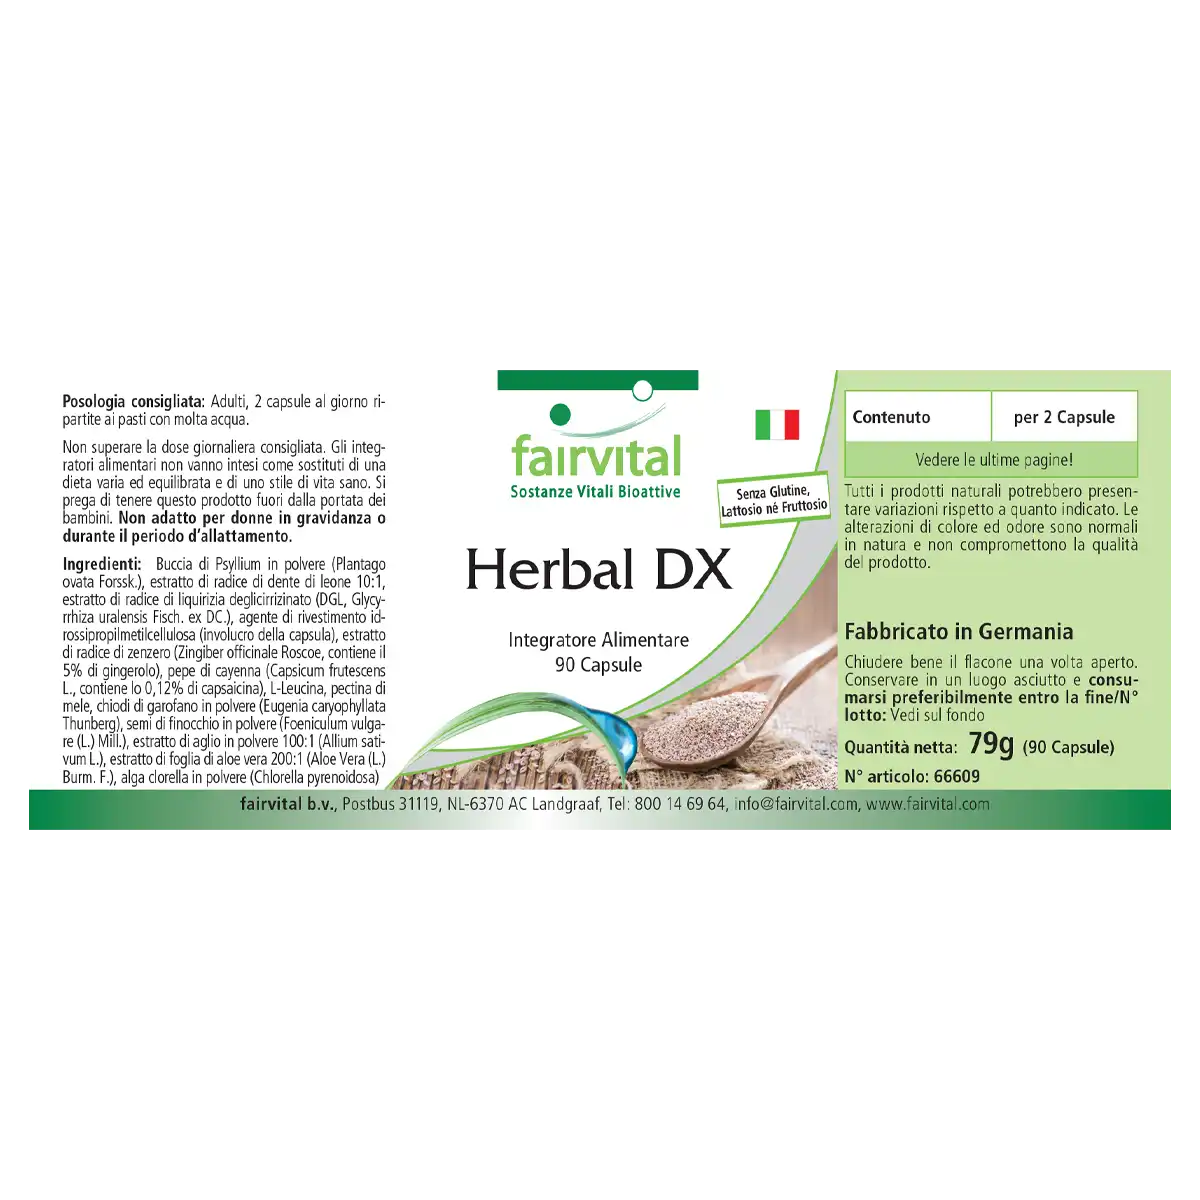 Herbal DX - 90 Capsules